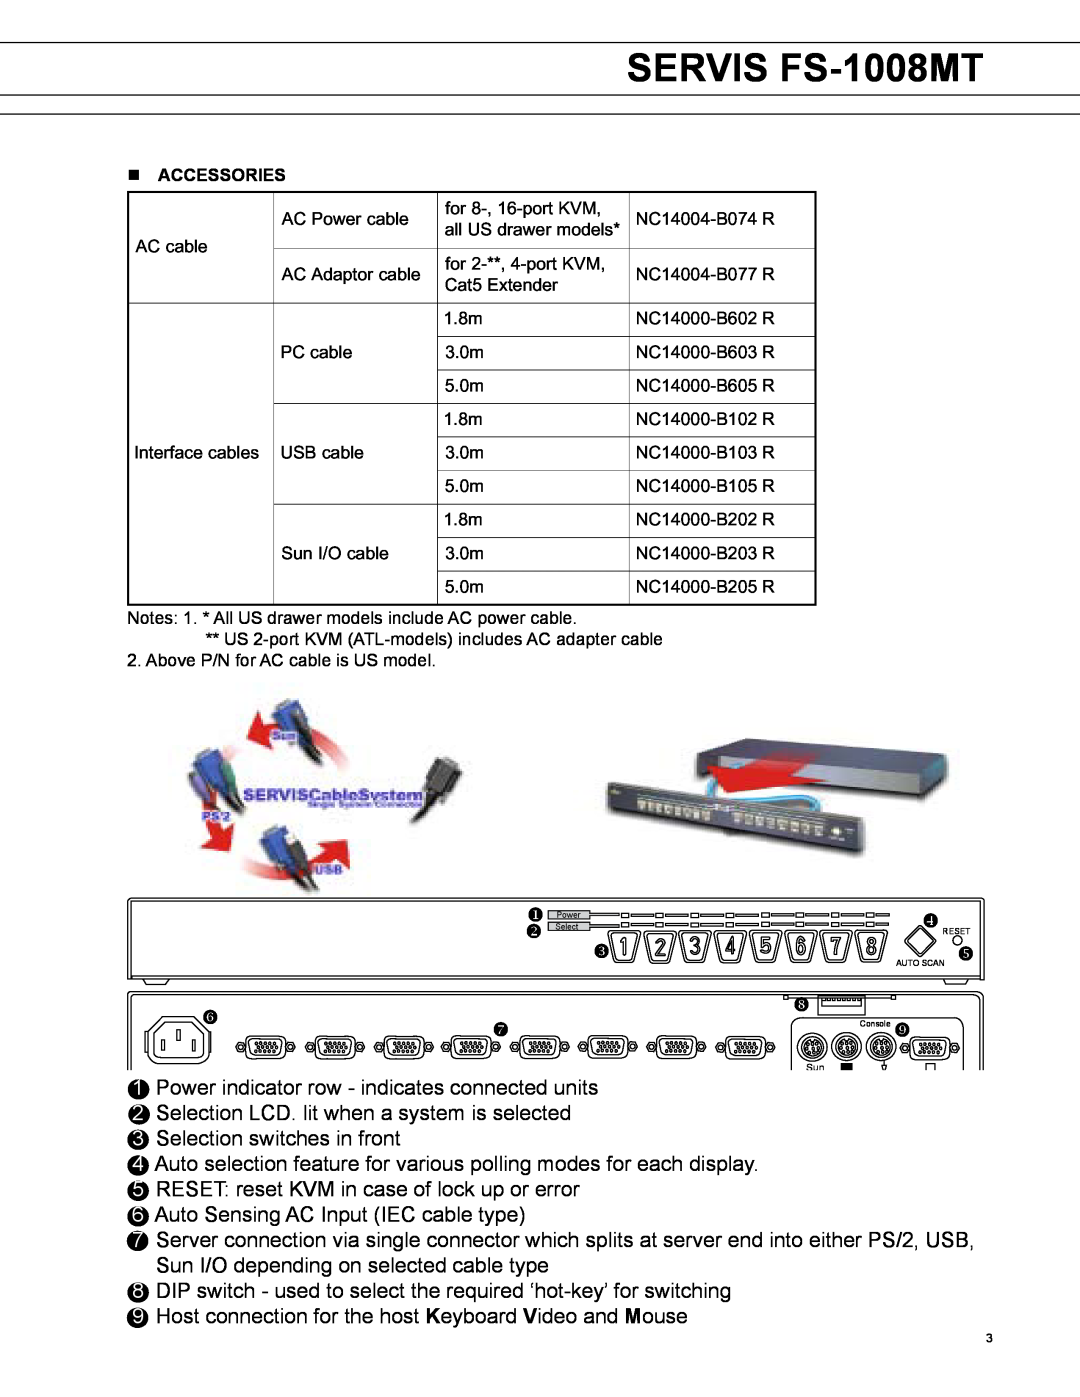 Fujitsu FS-1008MT Series manual SERVIS FS-1008MT, 1Power indicator row - indicates connected units 